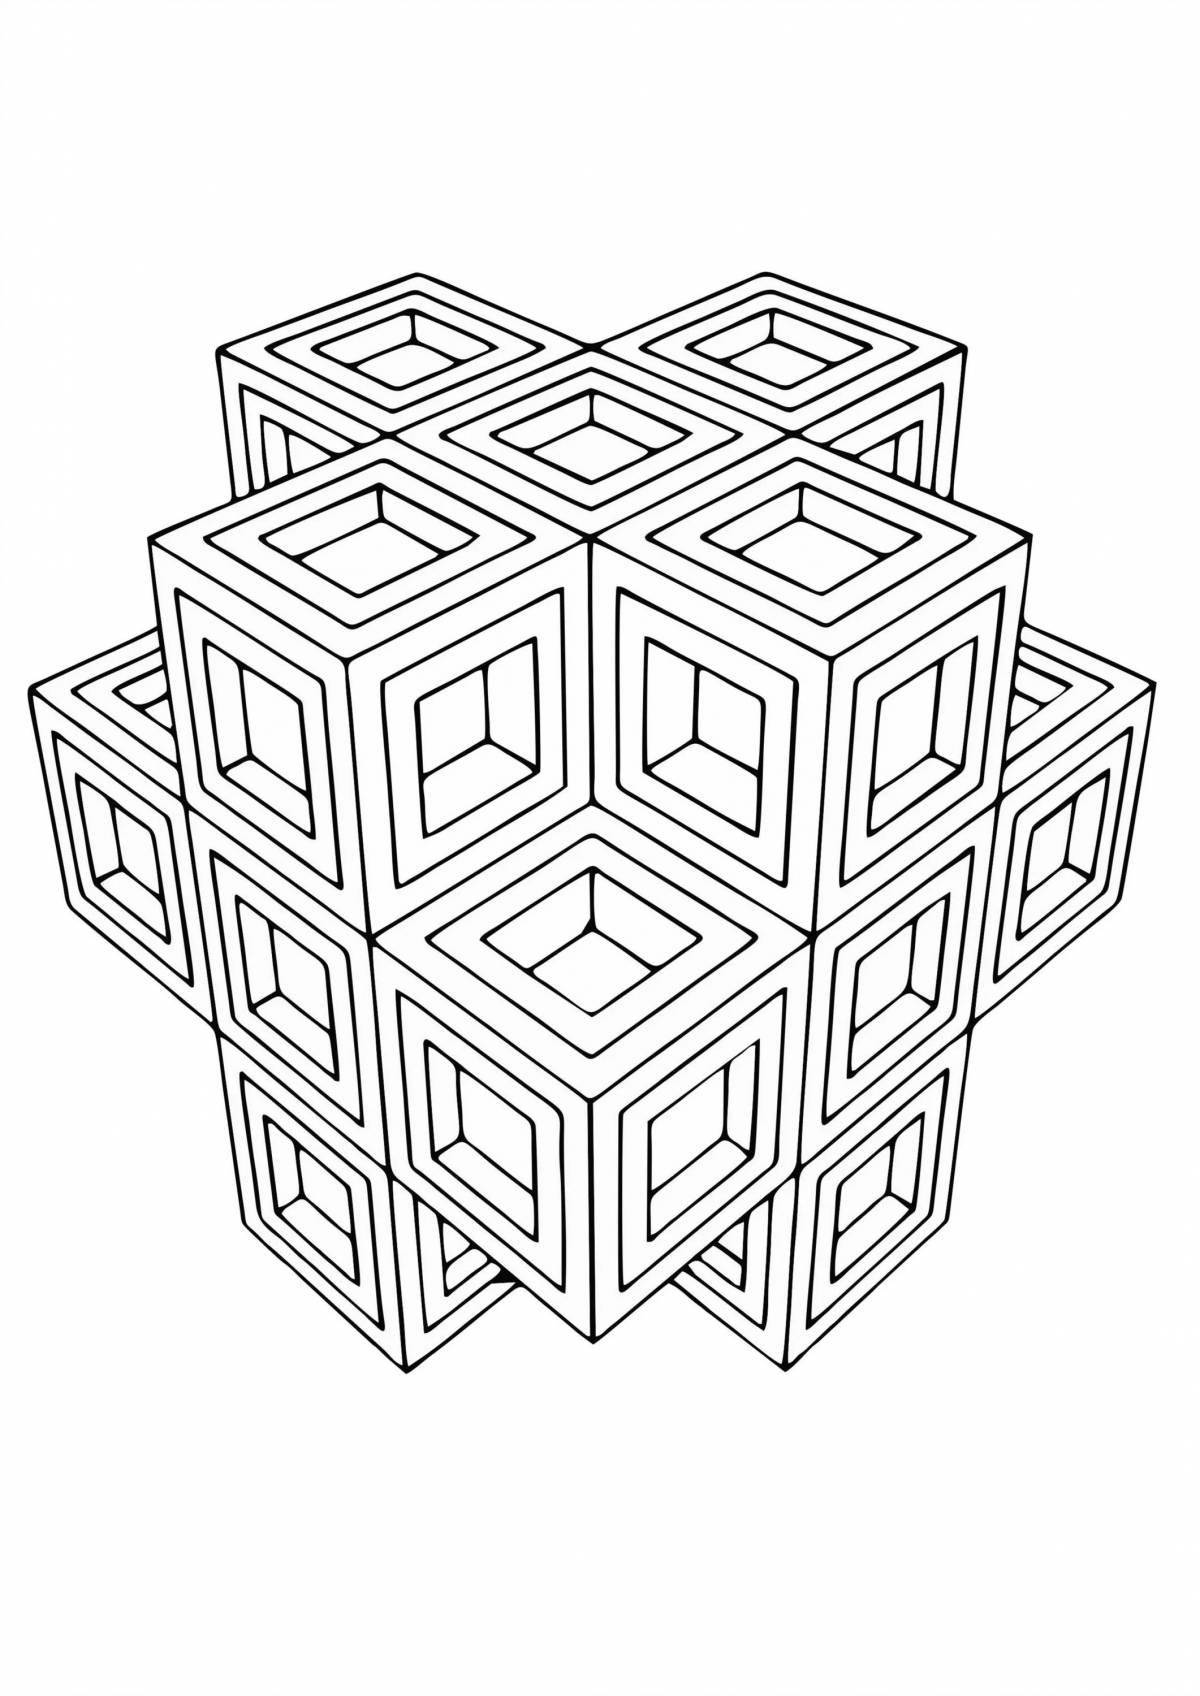 Cube #1